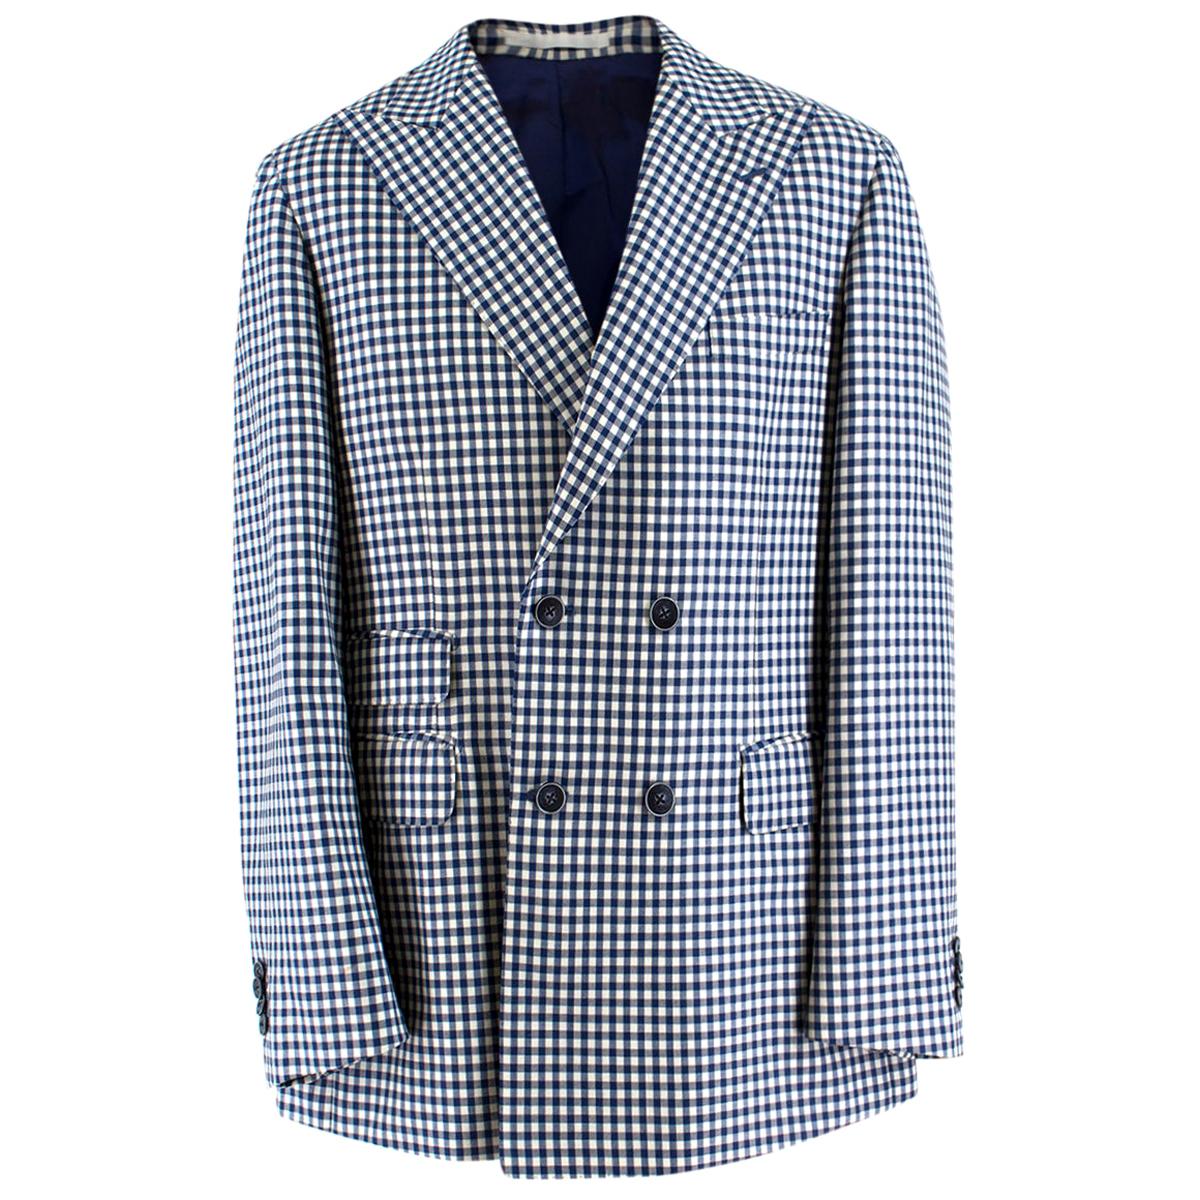 Savile Clifford Bespoke Checkered Blazer Jacket estimated SIZE L For Sale